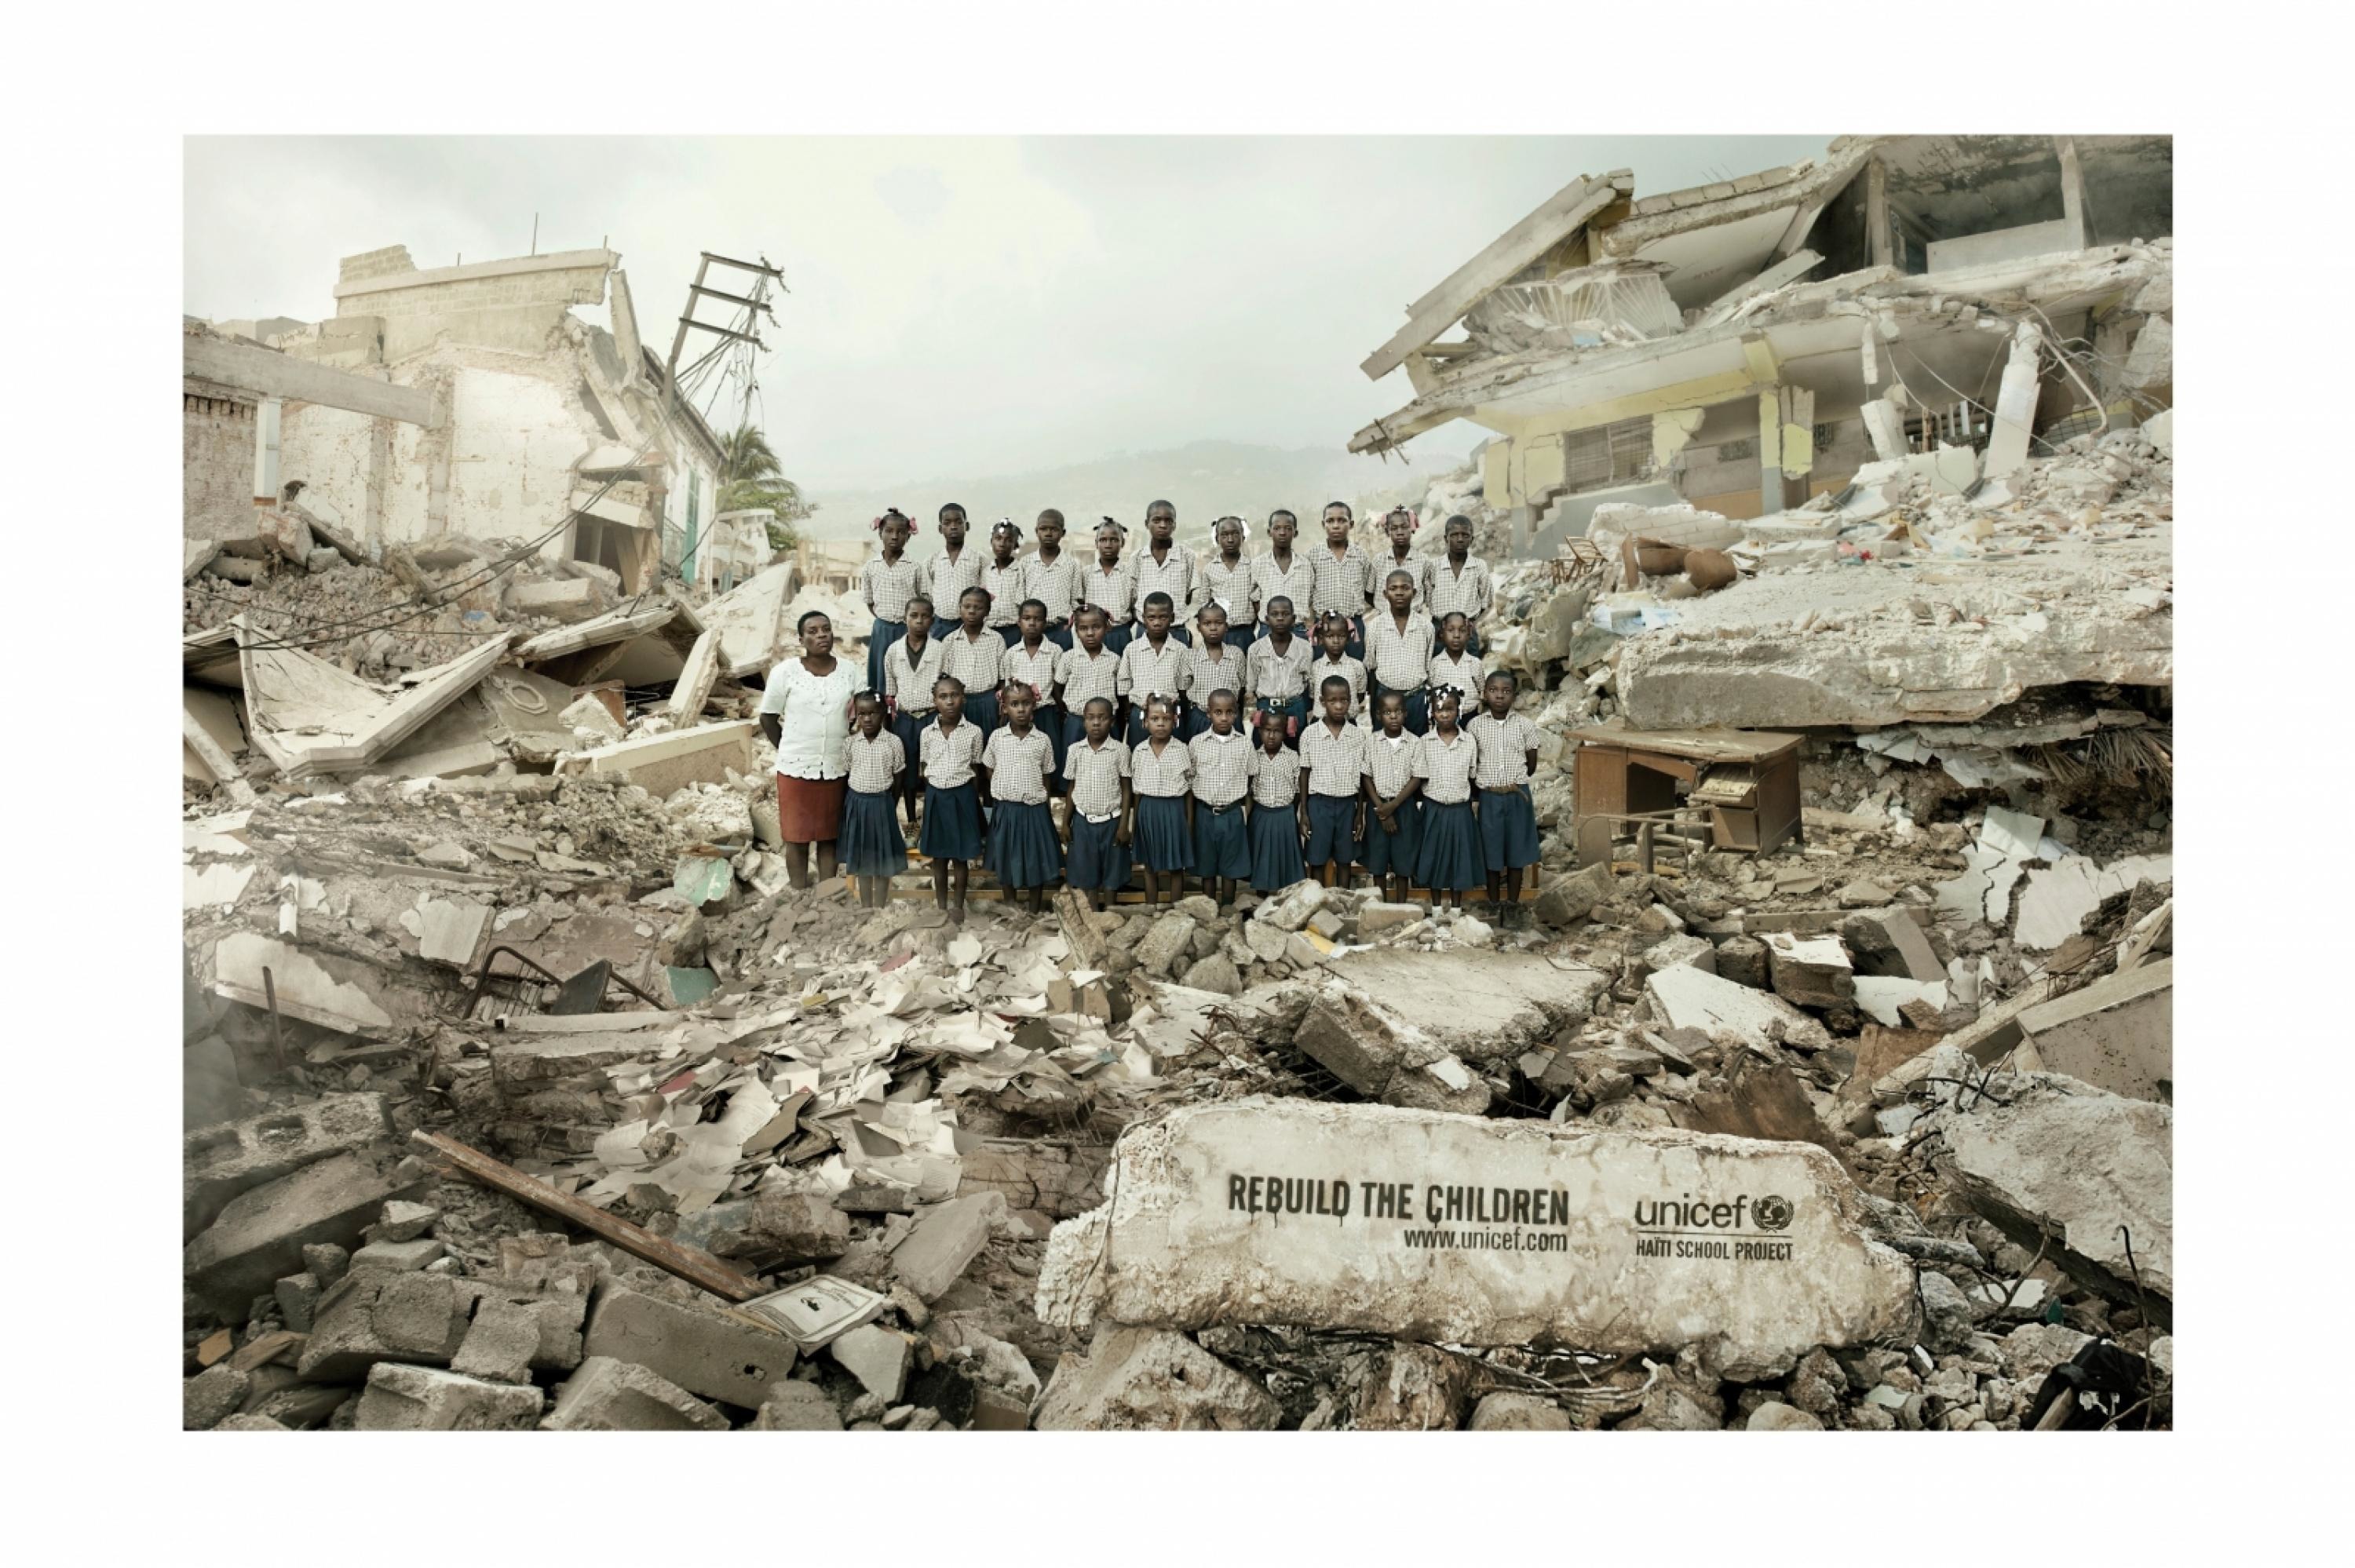 HAITI SCHOOL PROJECT